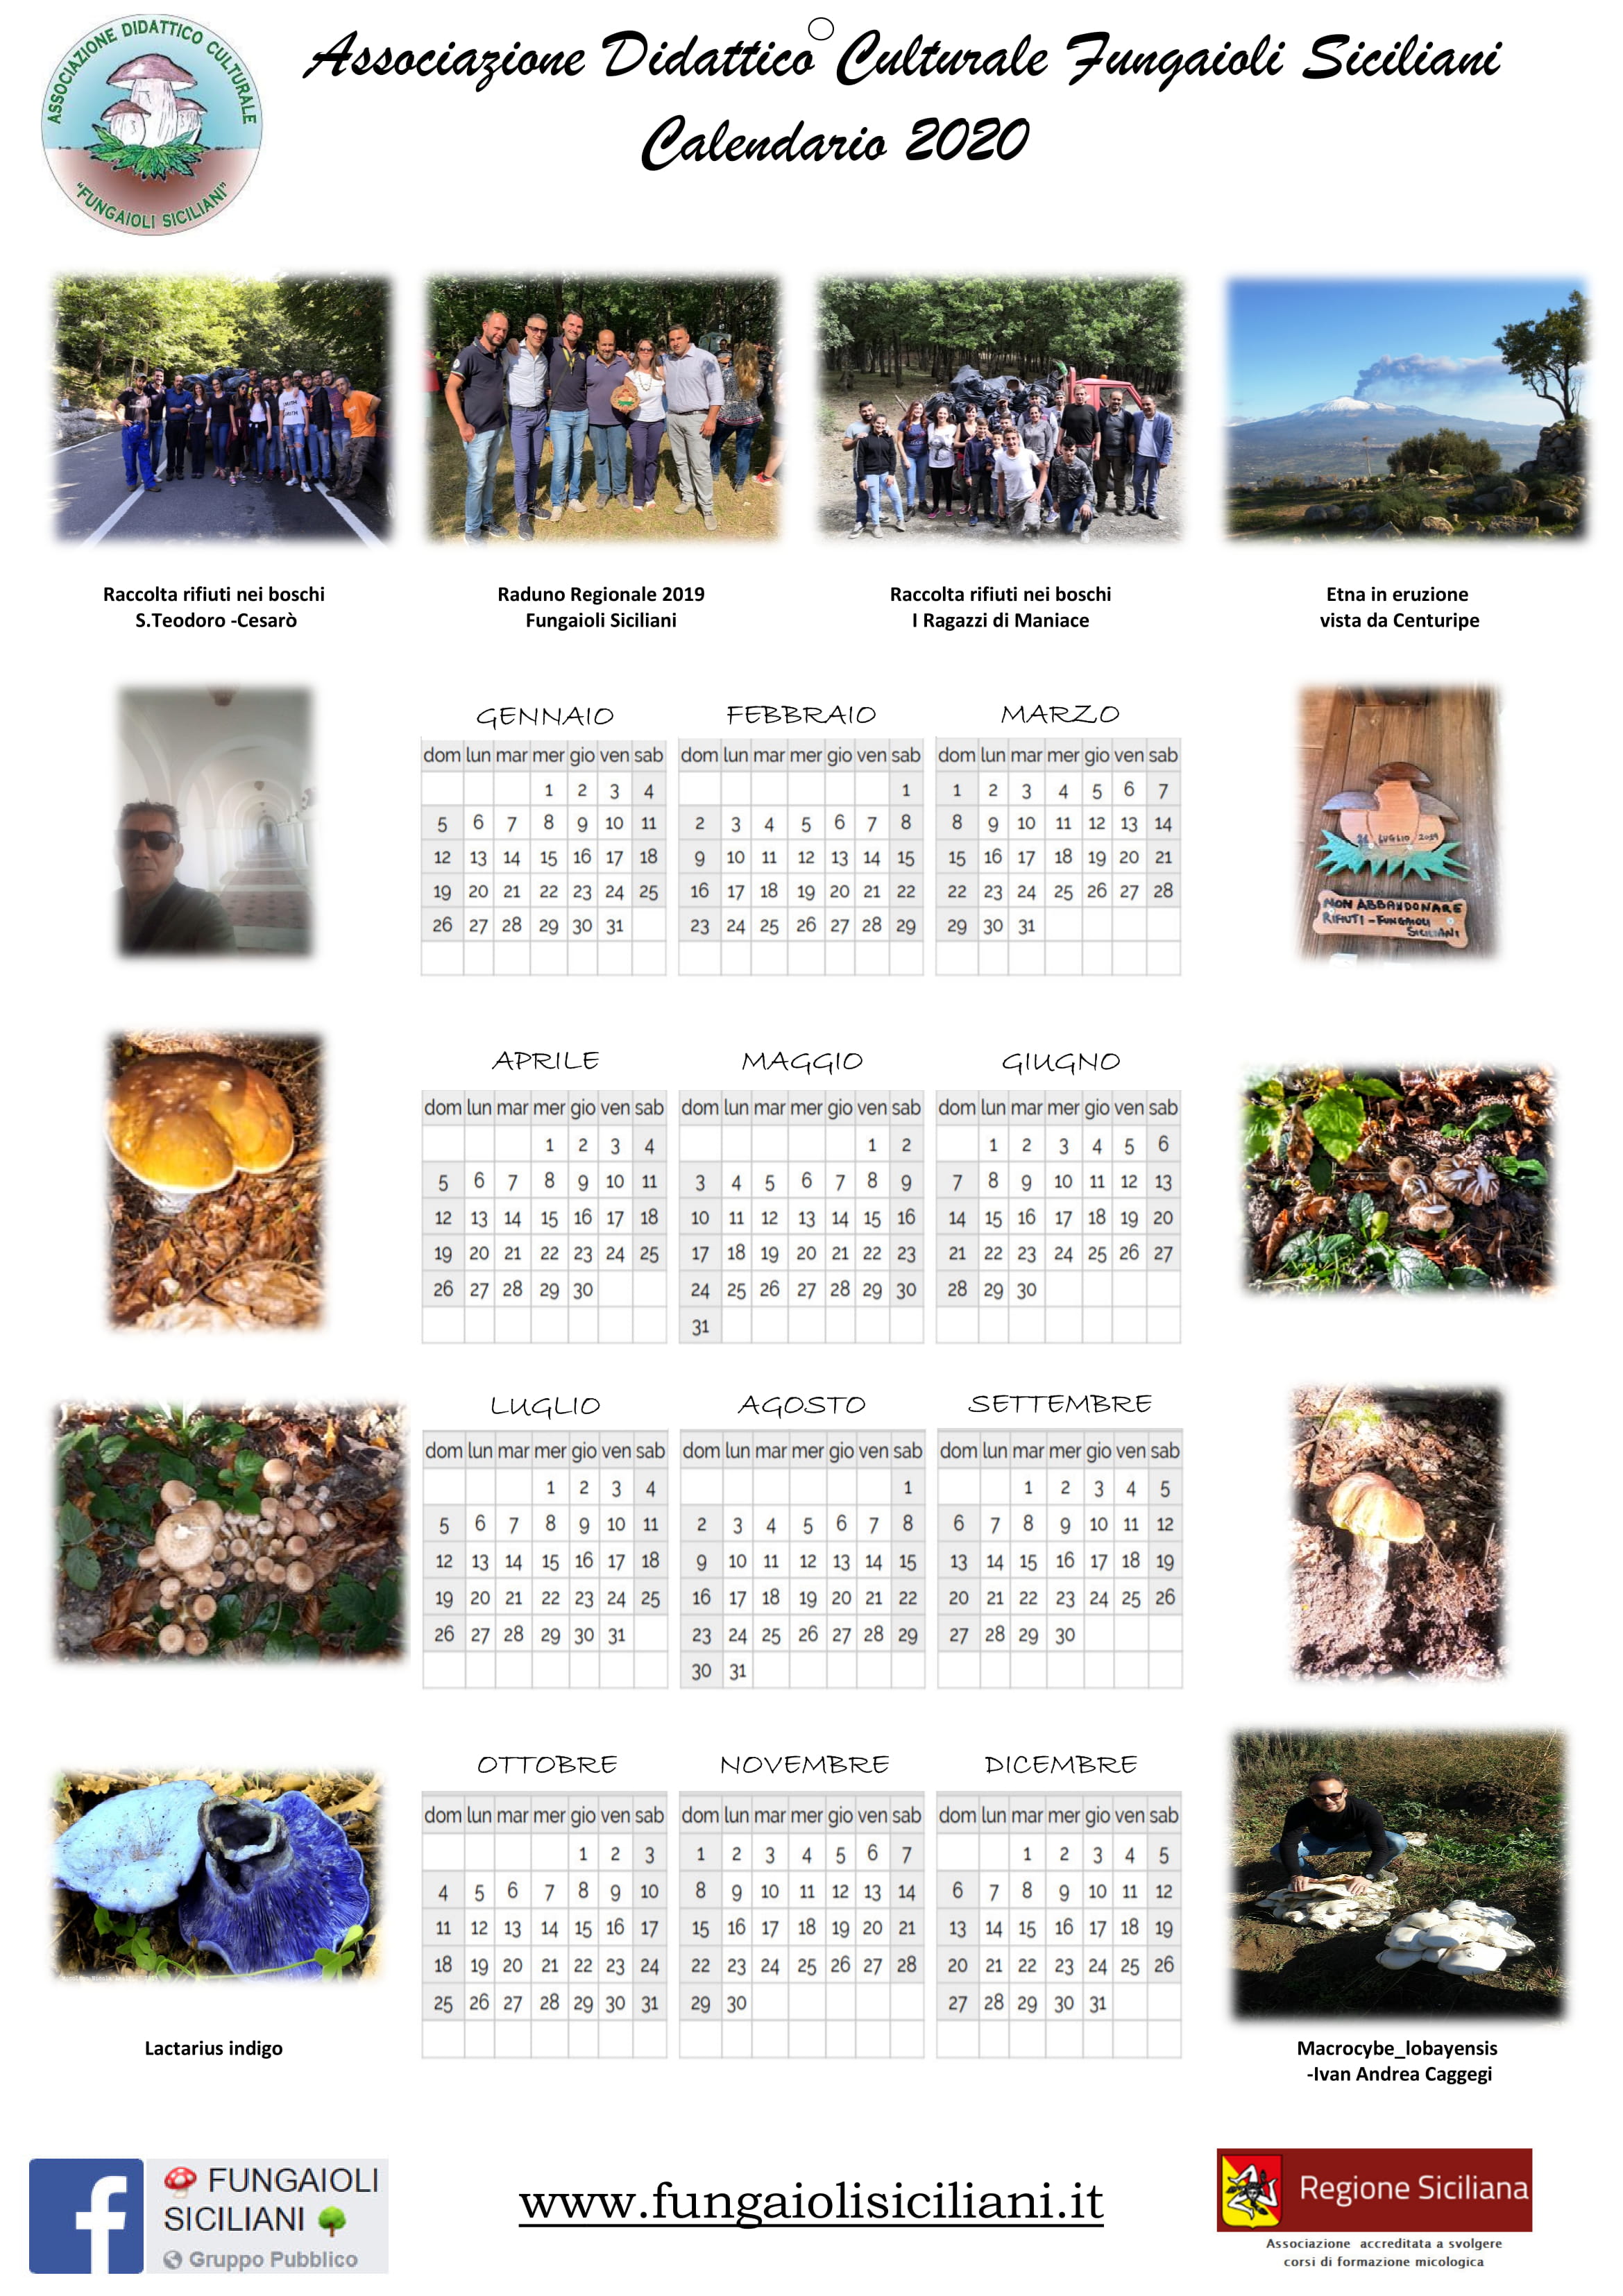 Calendario_2020-cucinotta-filippo-1.jpg - 894,01 kB